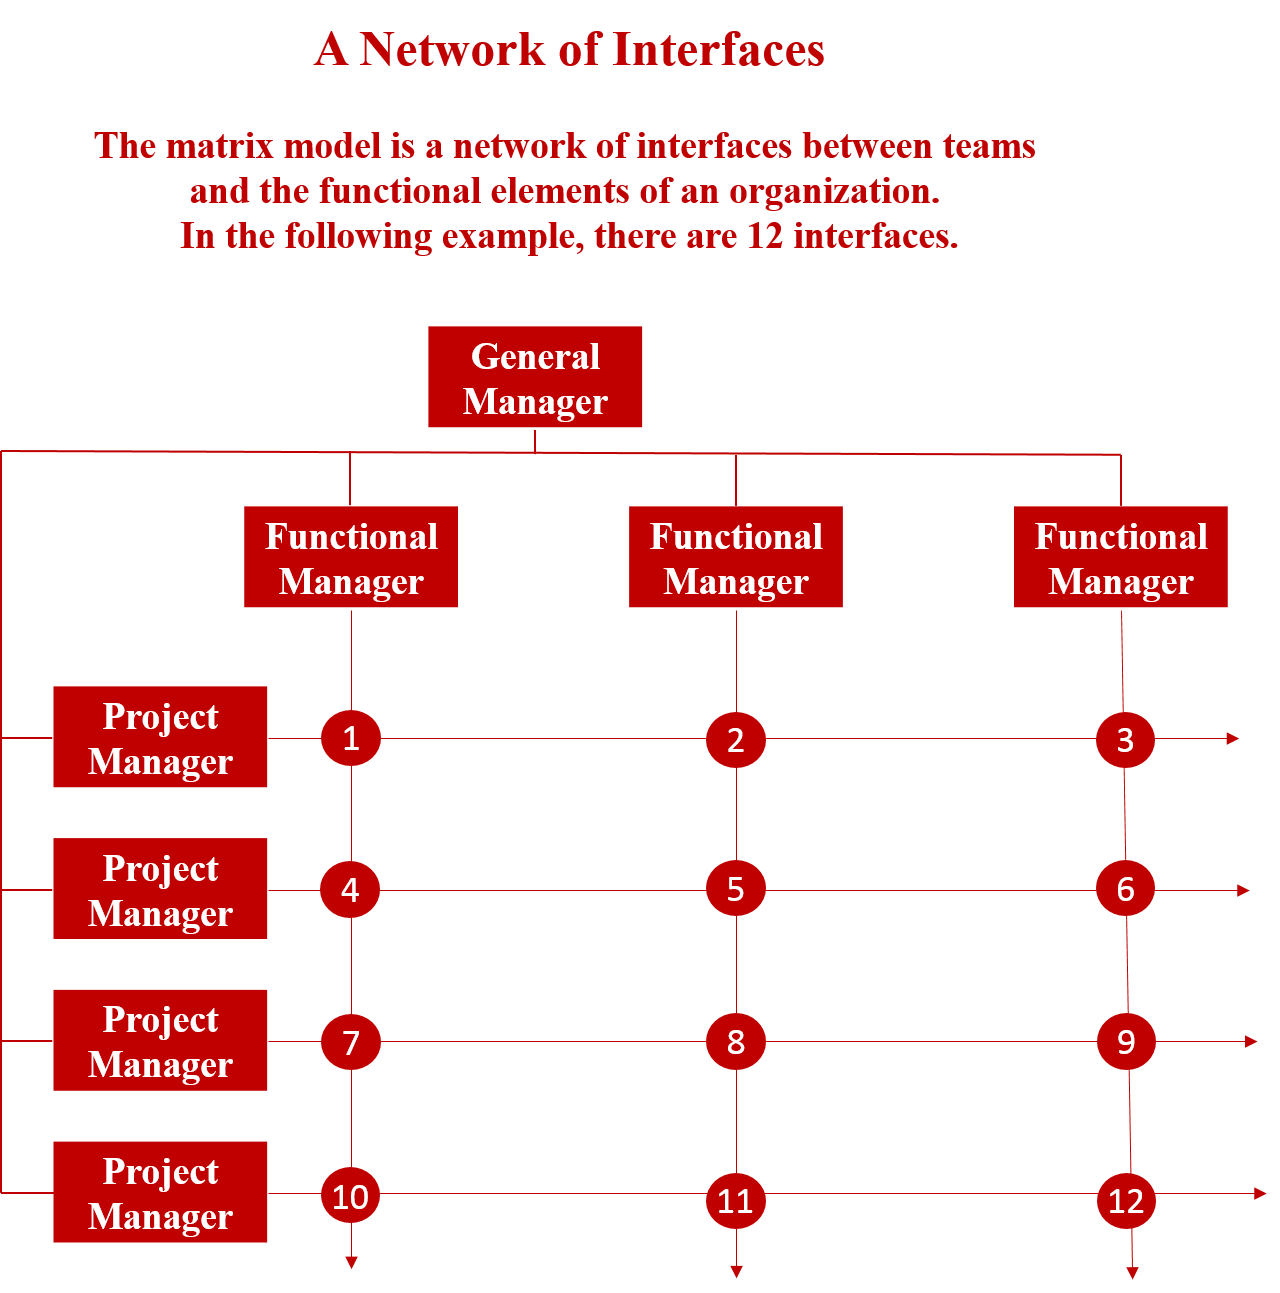 Example of a Matrix Model Interface